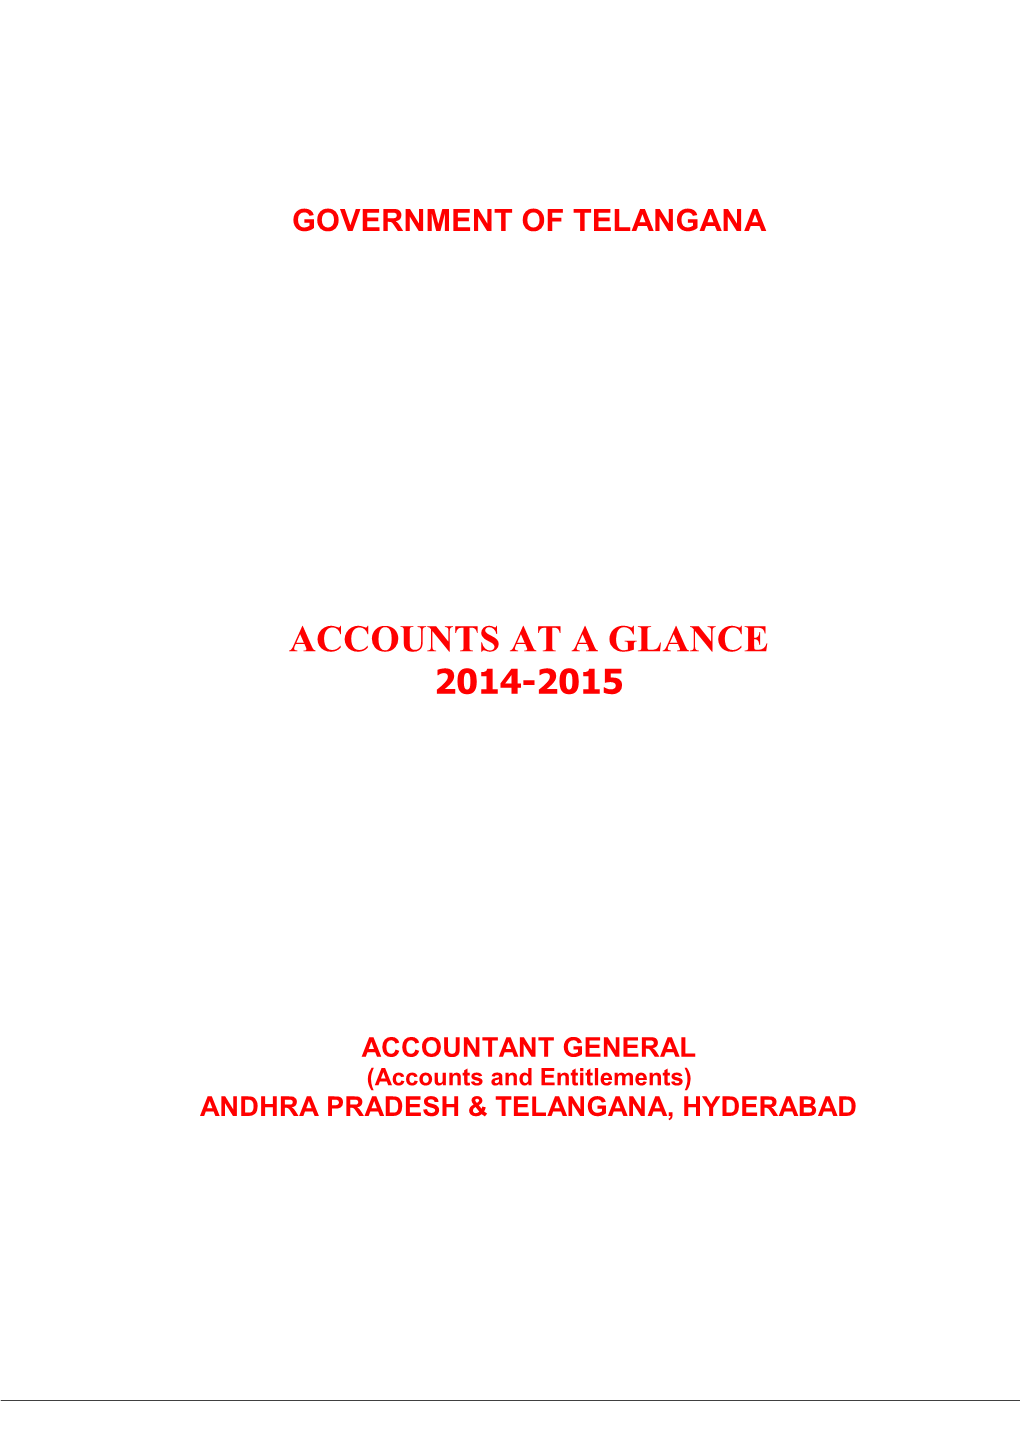 Accounts at a Glance 2014-2015